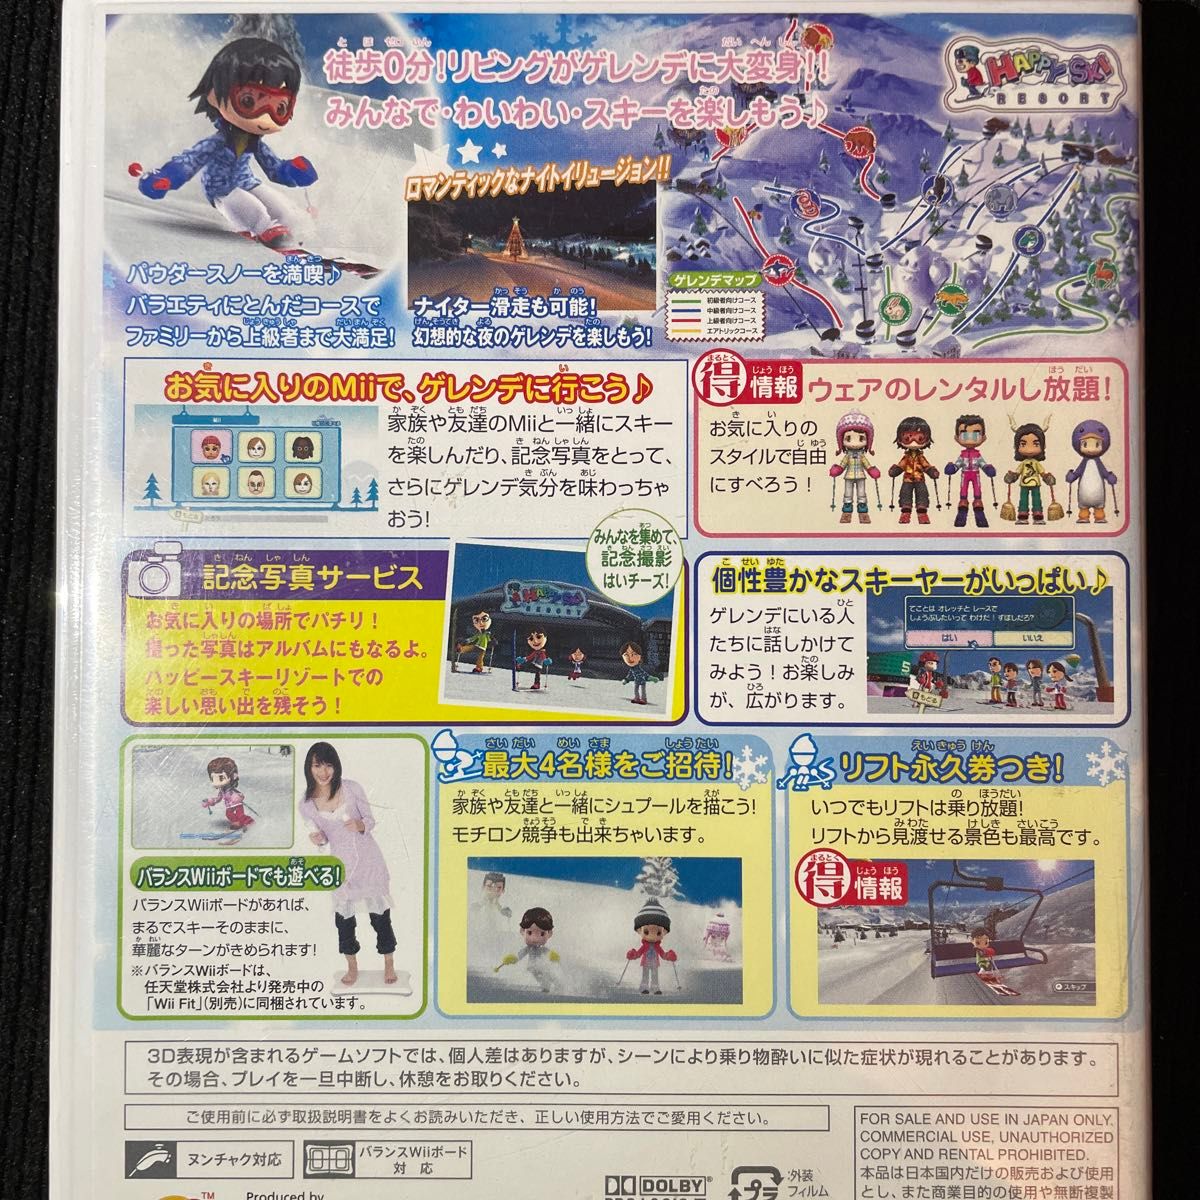 【Wii】 ファミリースキー ワールドスキー＆スノーボード ゴーバケーション Wiifit Wiiバランスボード対応ソフト 4本